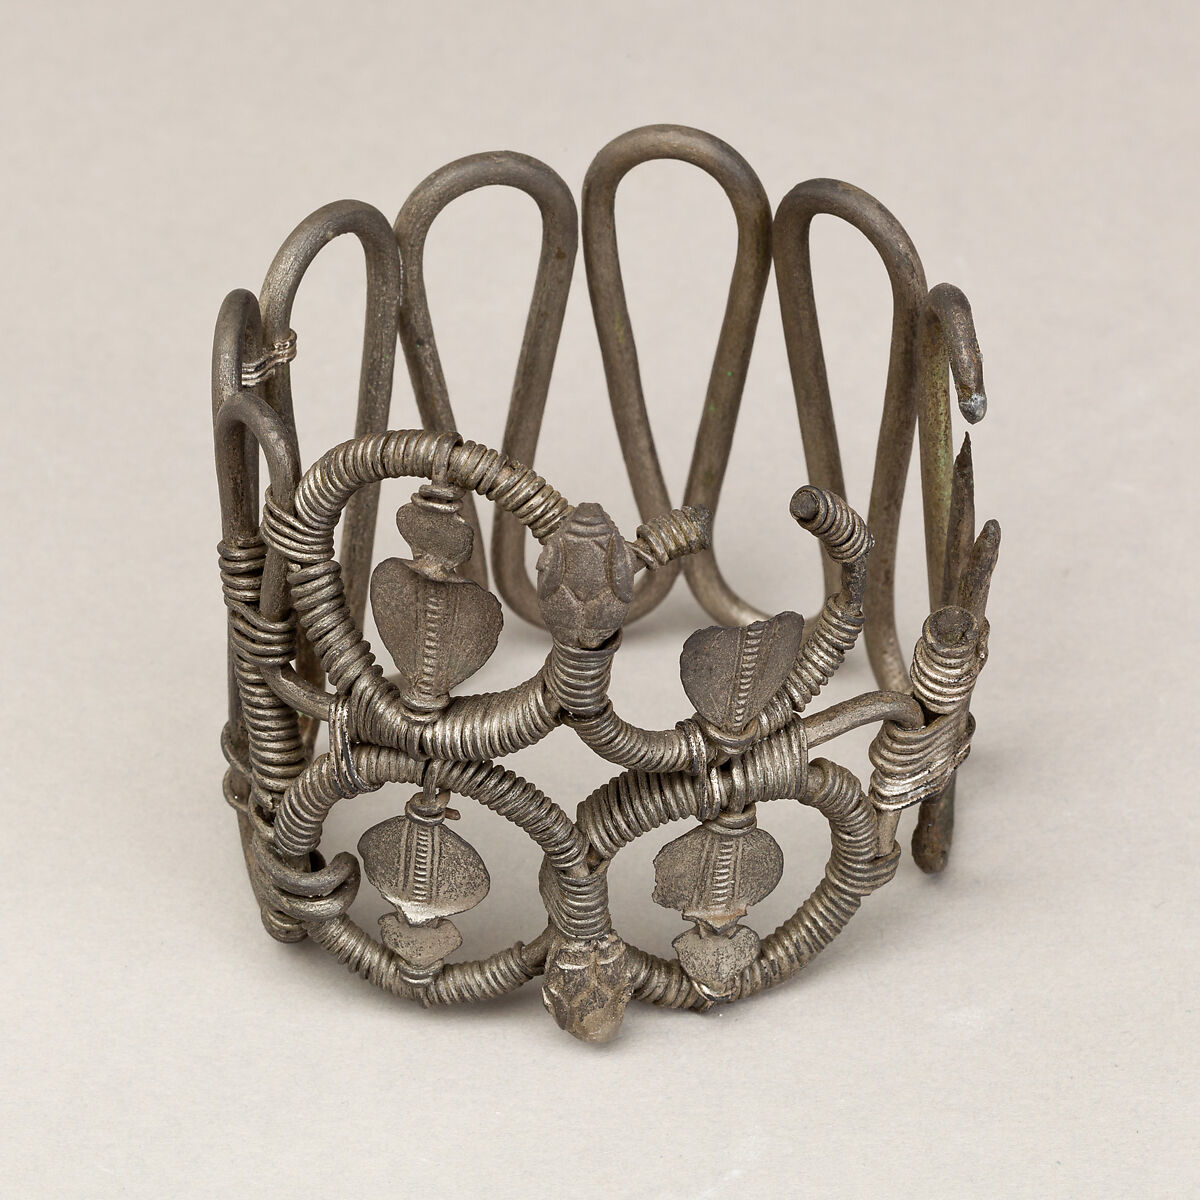 Bracelet or armlet with uraei, Silver 